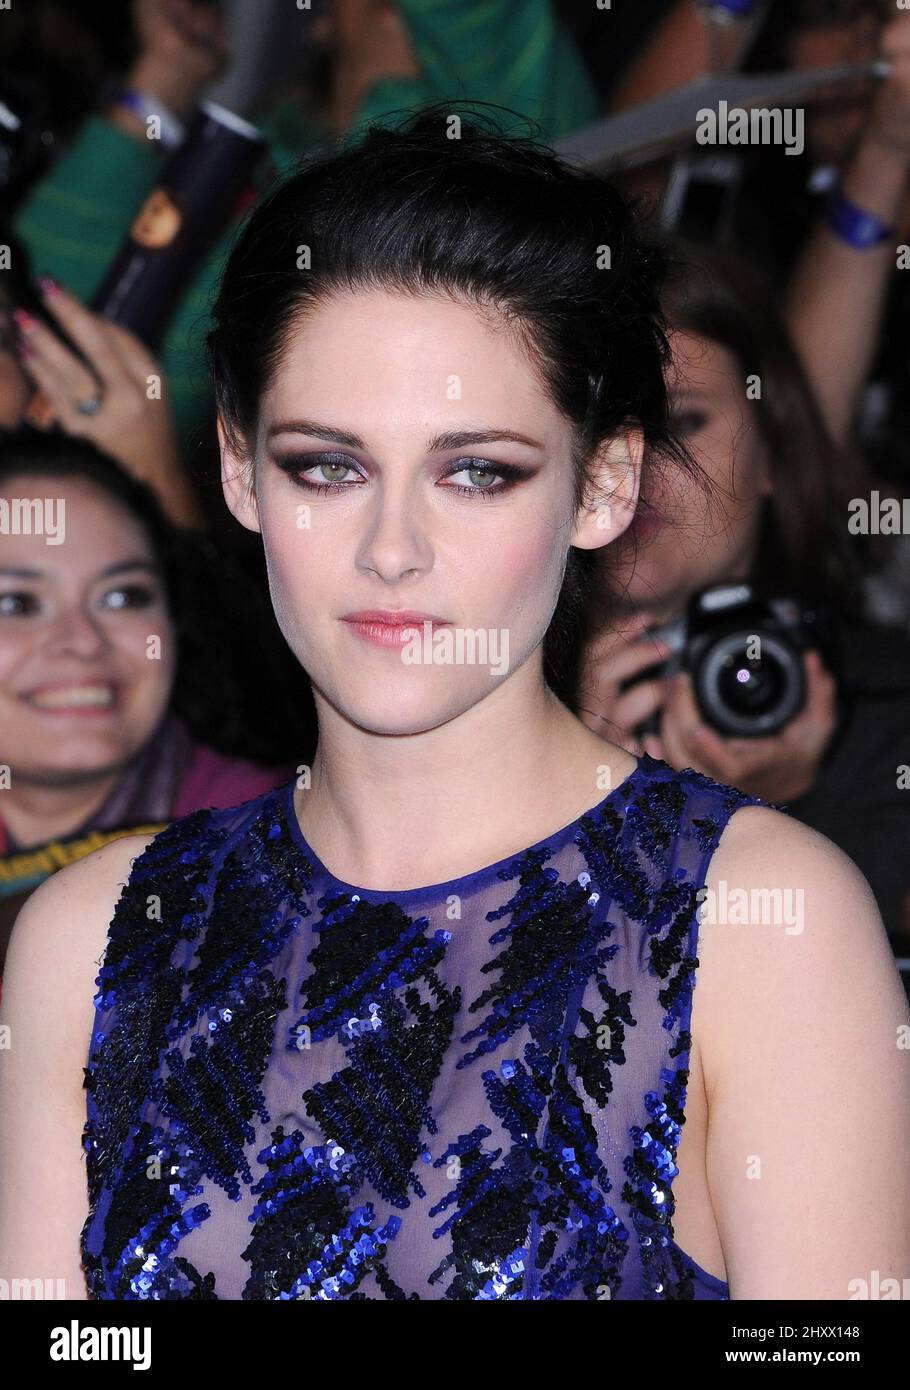 Kristen Stewart attending the premiere of 'The Twilight Saga: Breaking Dawn - Part 1' in Los Angeles, USA. Stock Photo